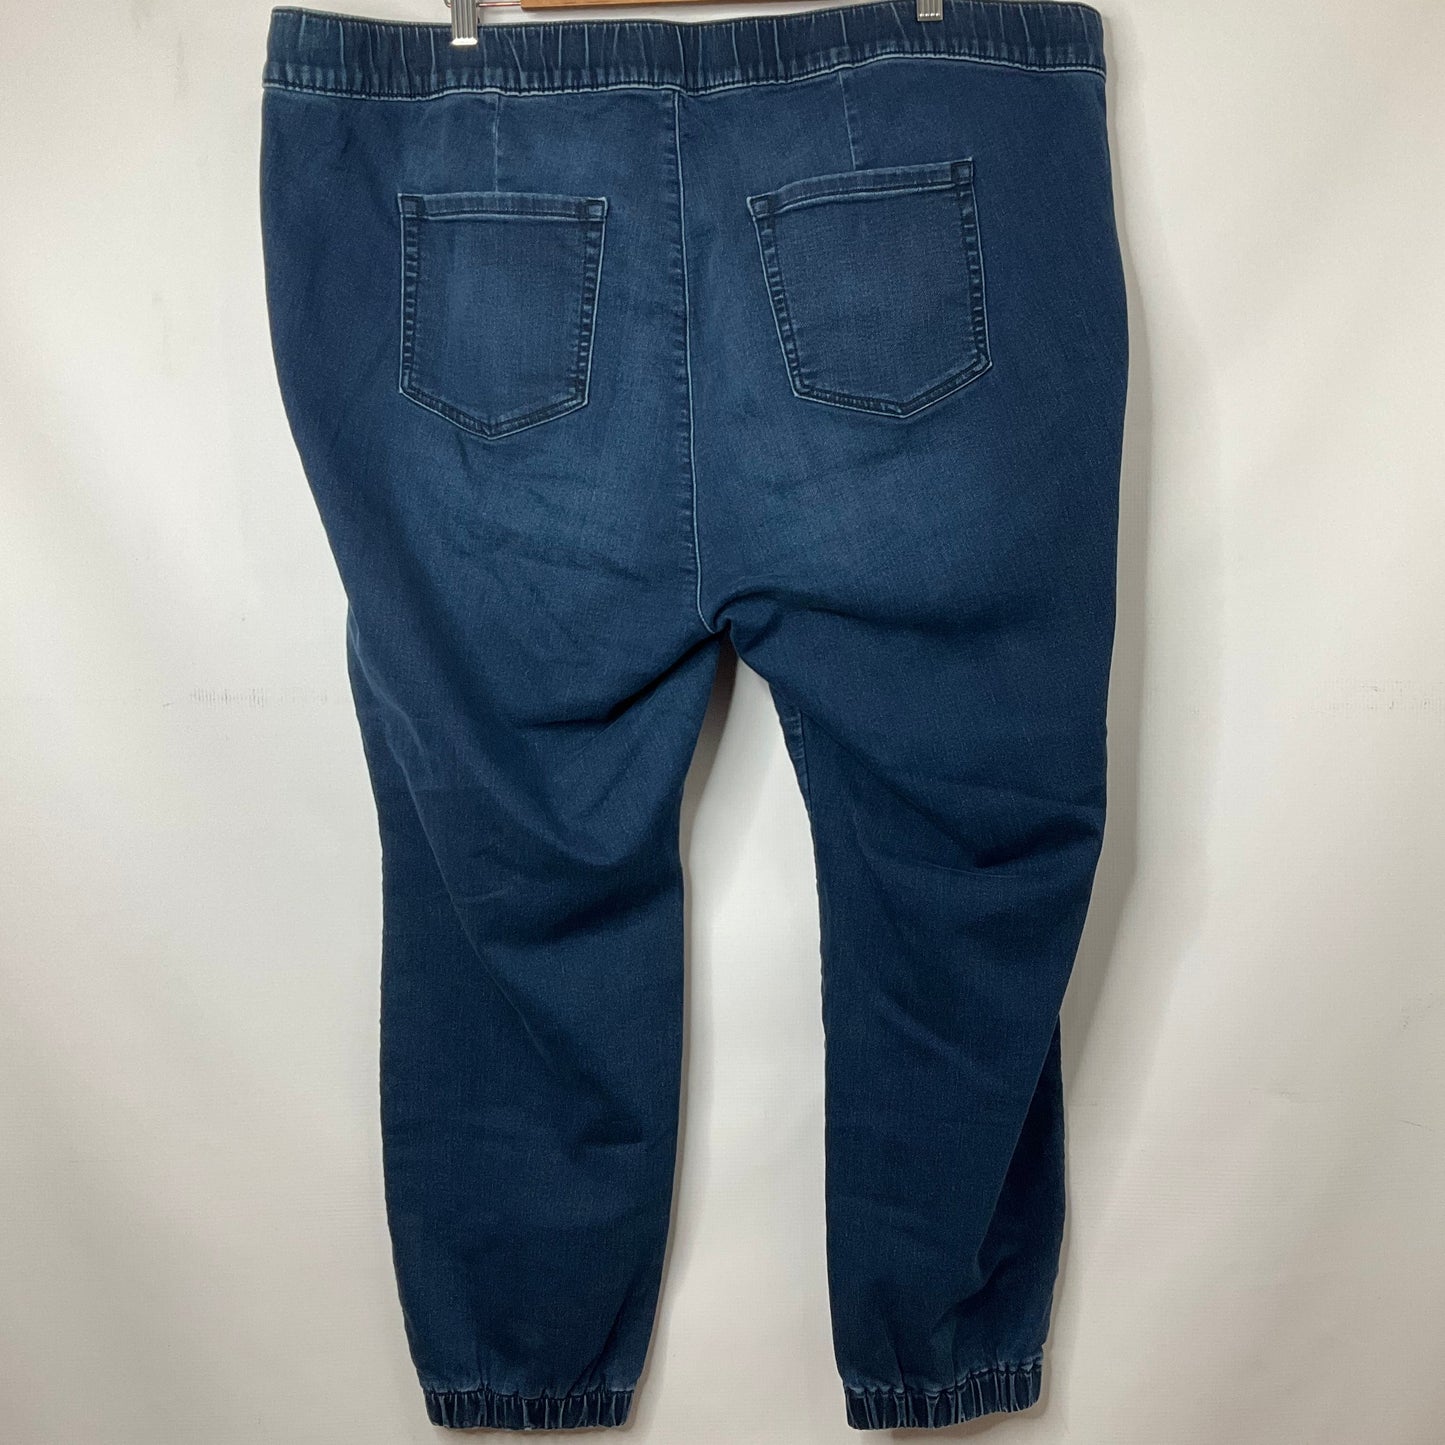 Blue Denim Jeans Boyfriend Torrid, Size 3x